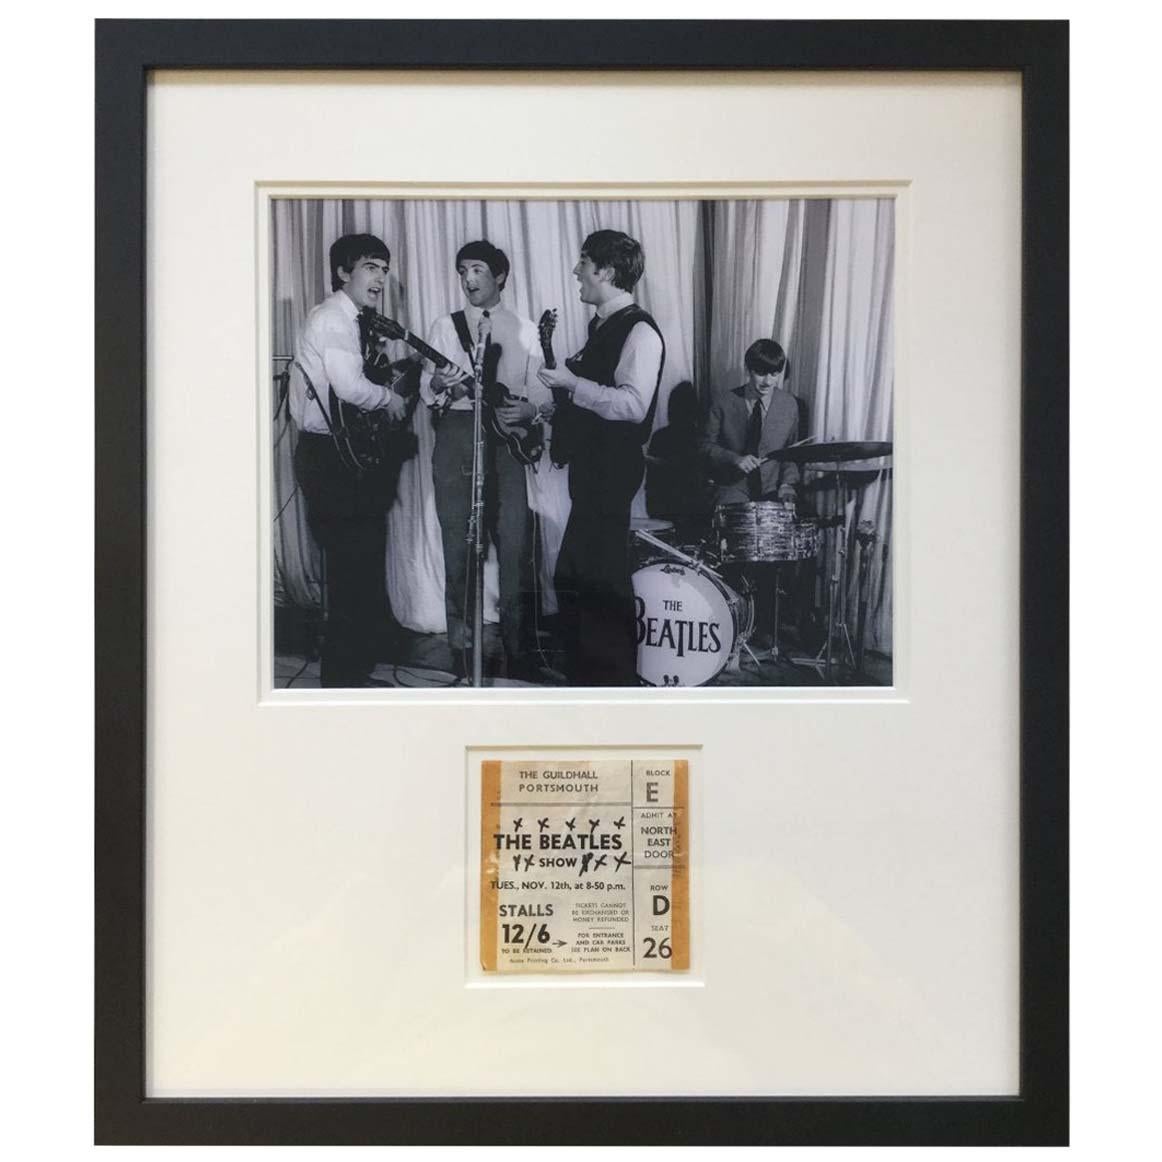 Original Vintage 1963 Beatles Concert Ticket